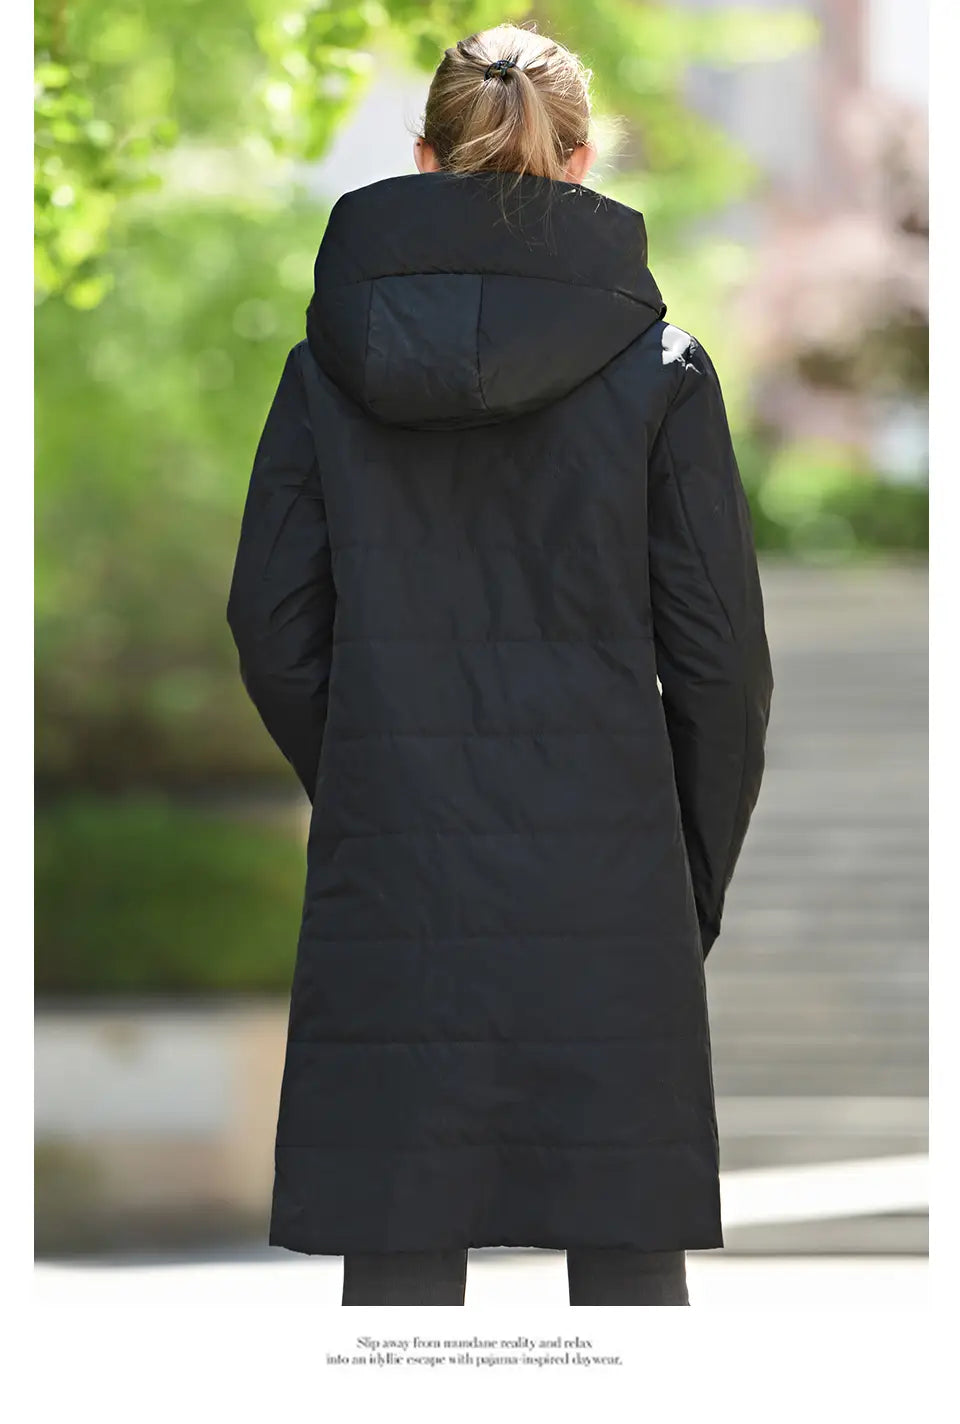 Lovemi - Large Winter Jackets For Women Long Jacket Outdoor